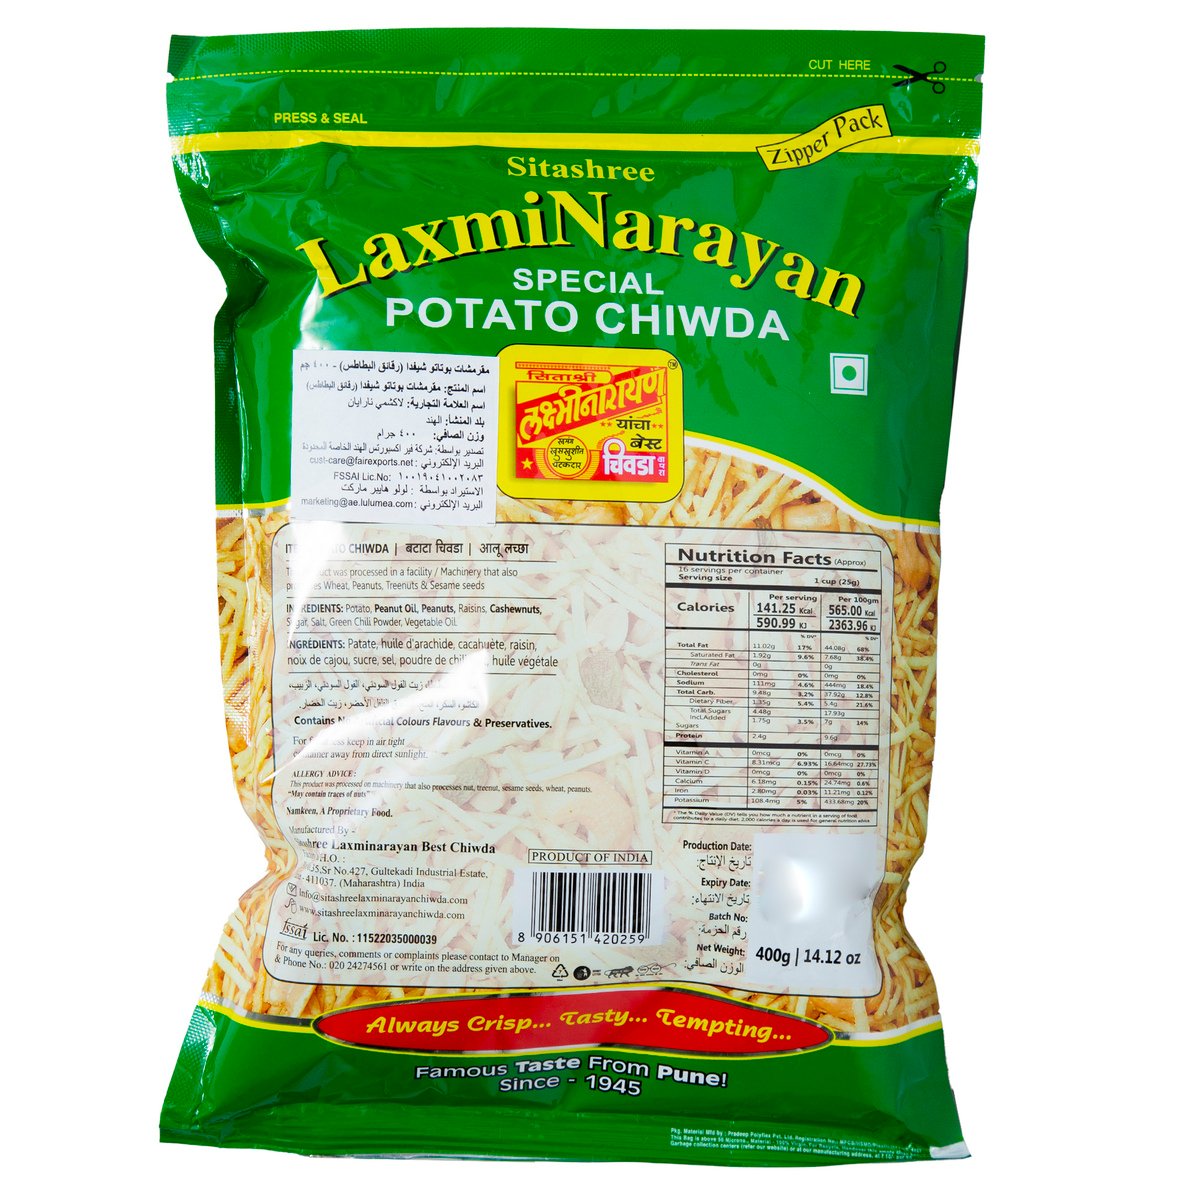 Laxmi Narayan Potato Chiwda 400 g